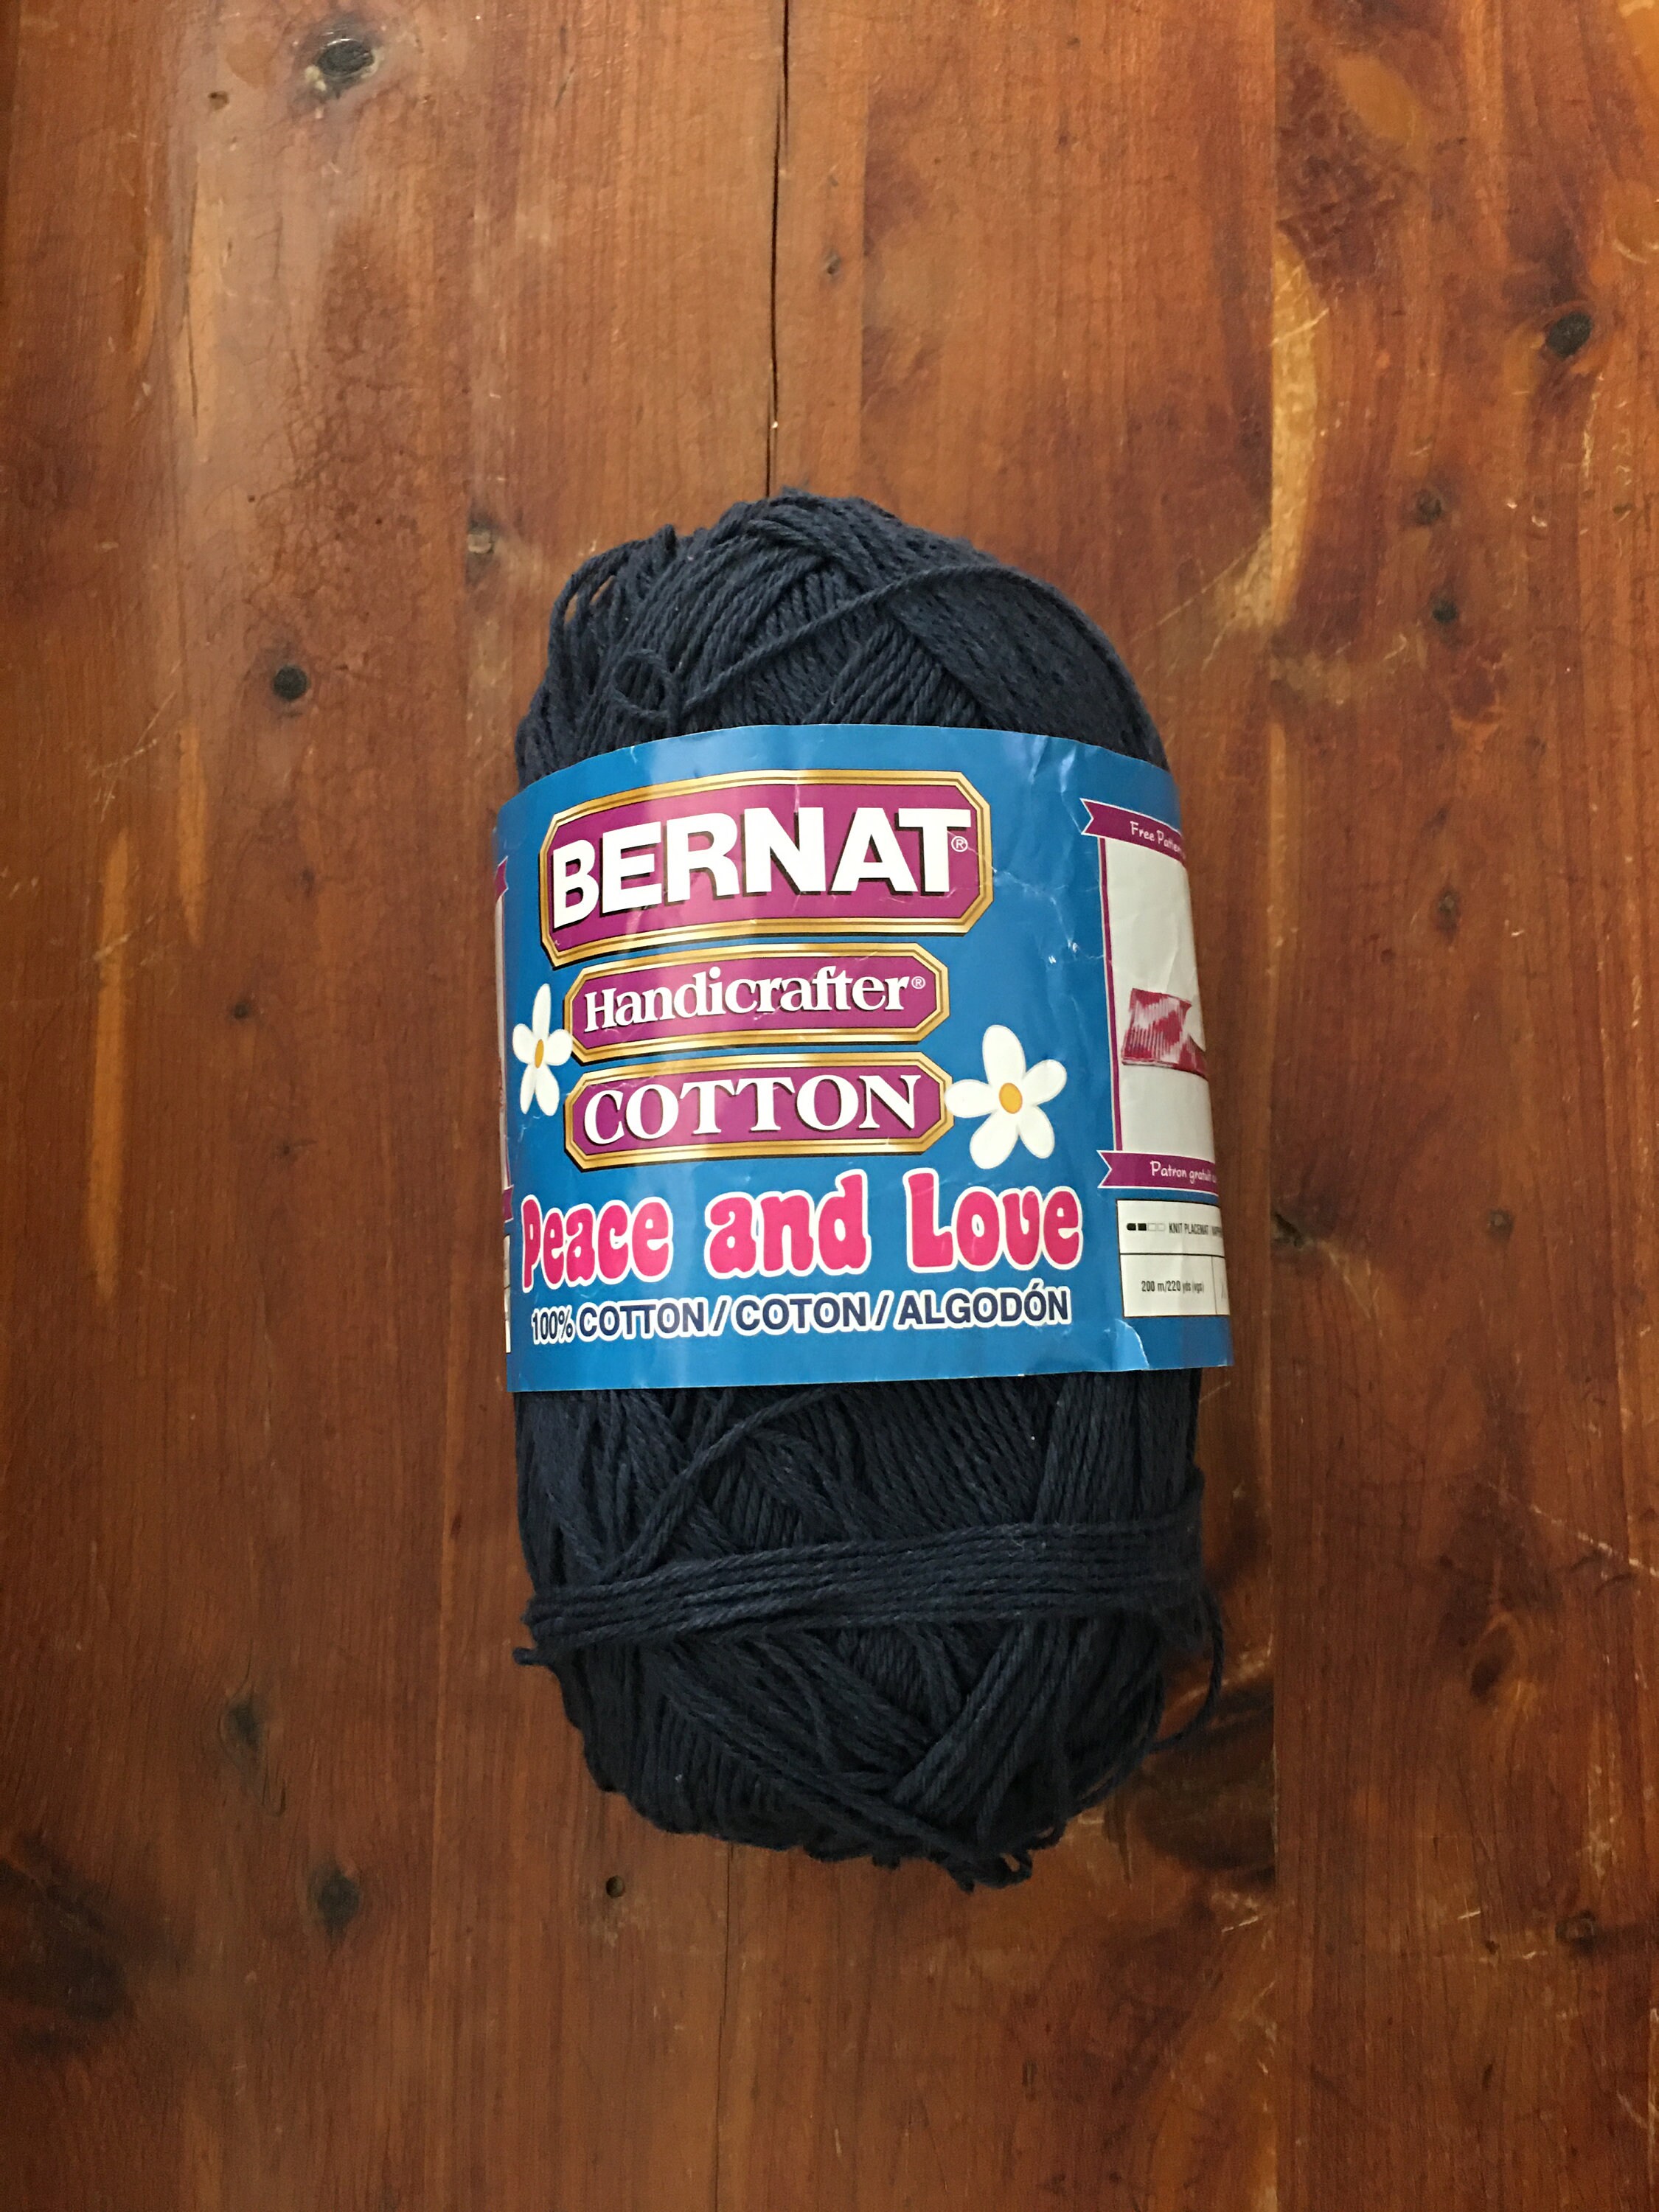 Bernat Handicrafter Cotton Ultrasoft Light Blue Yarn 1.75 Oz AT592